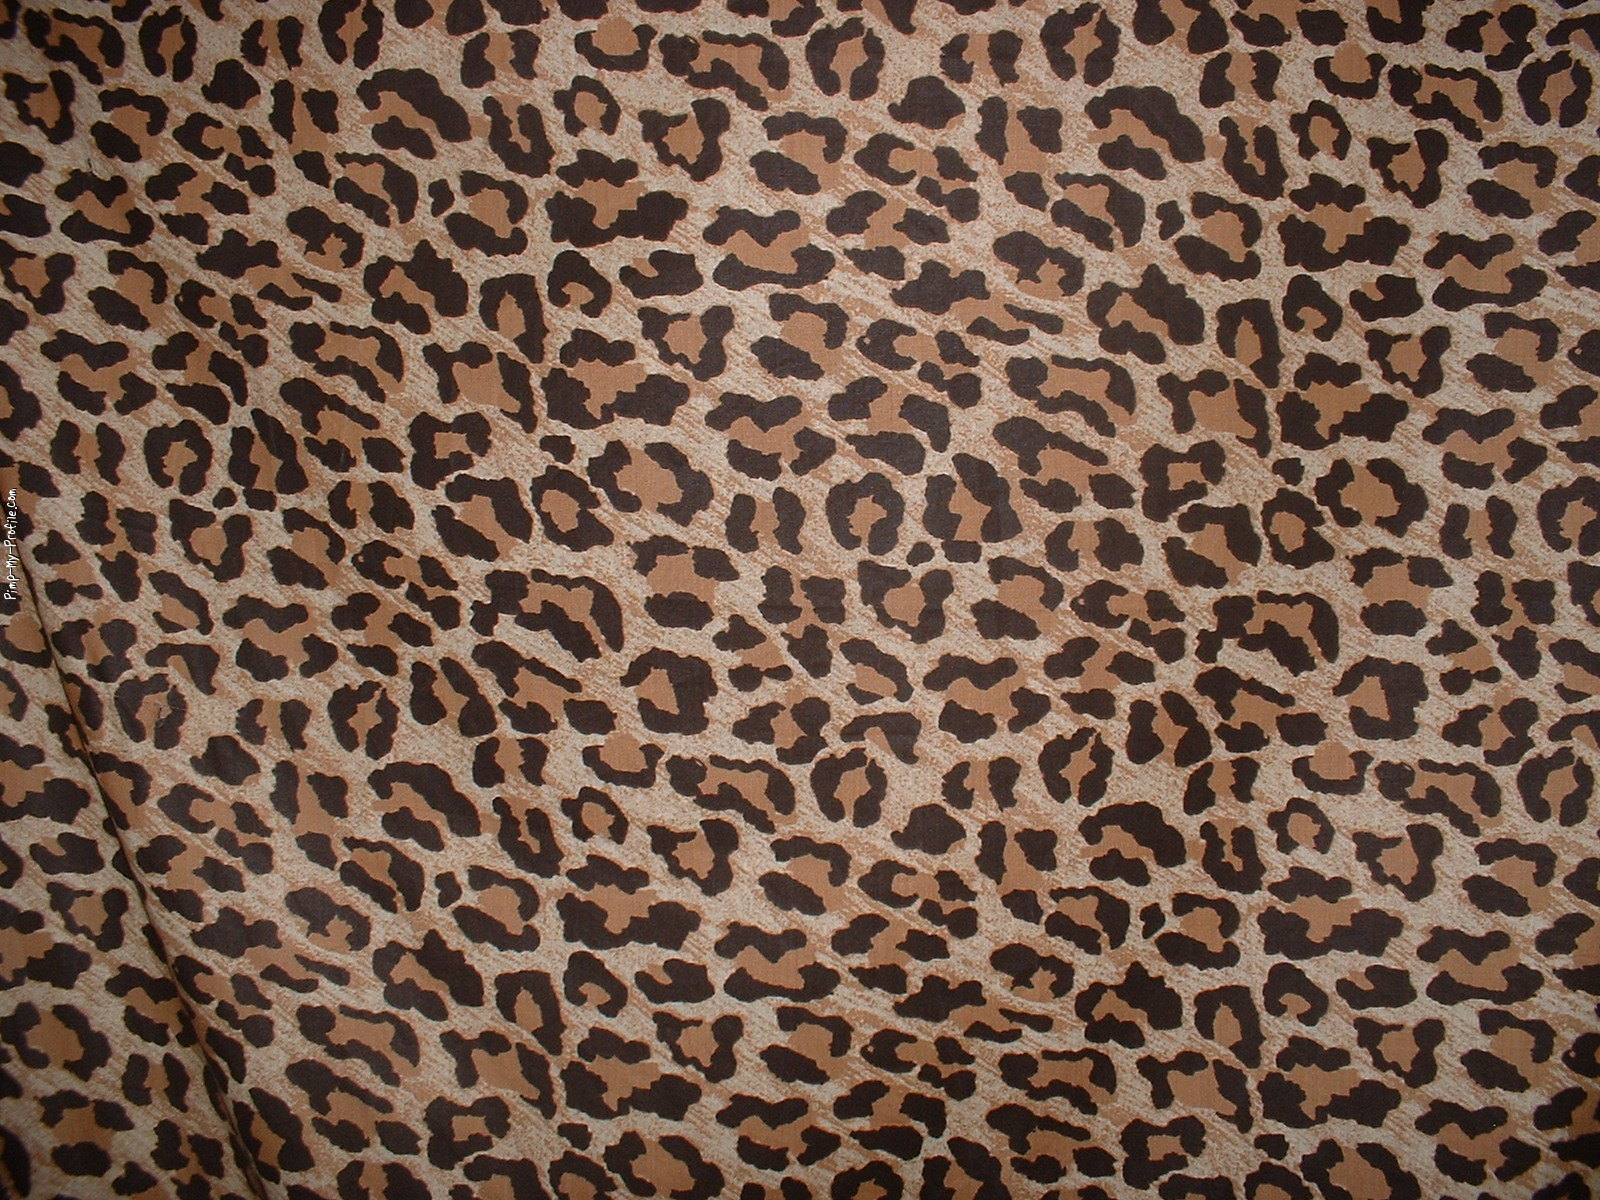 Leopard wallpaper, 1920x1080, 209651